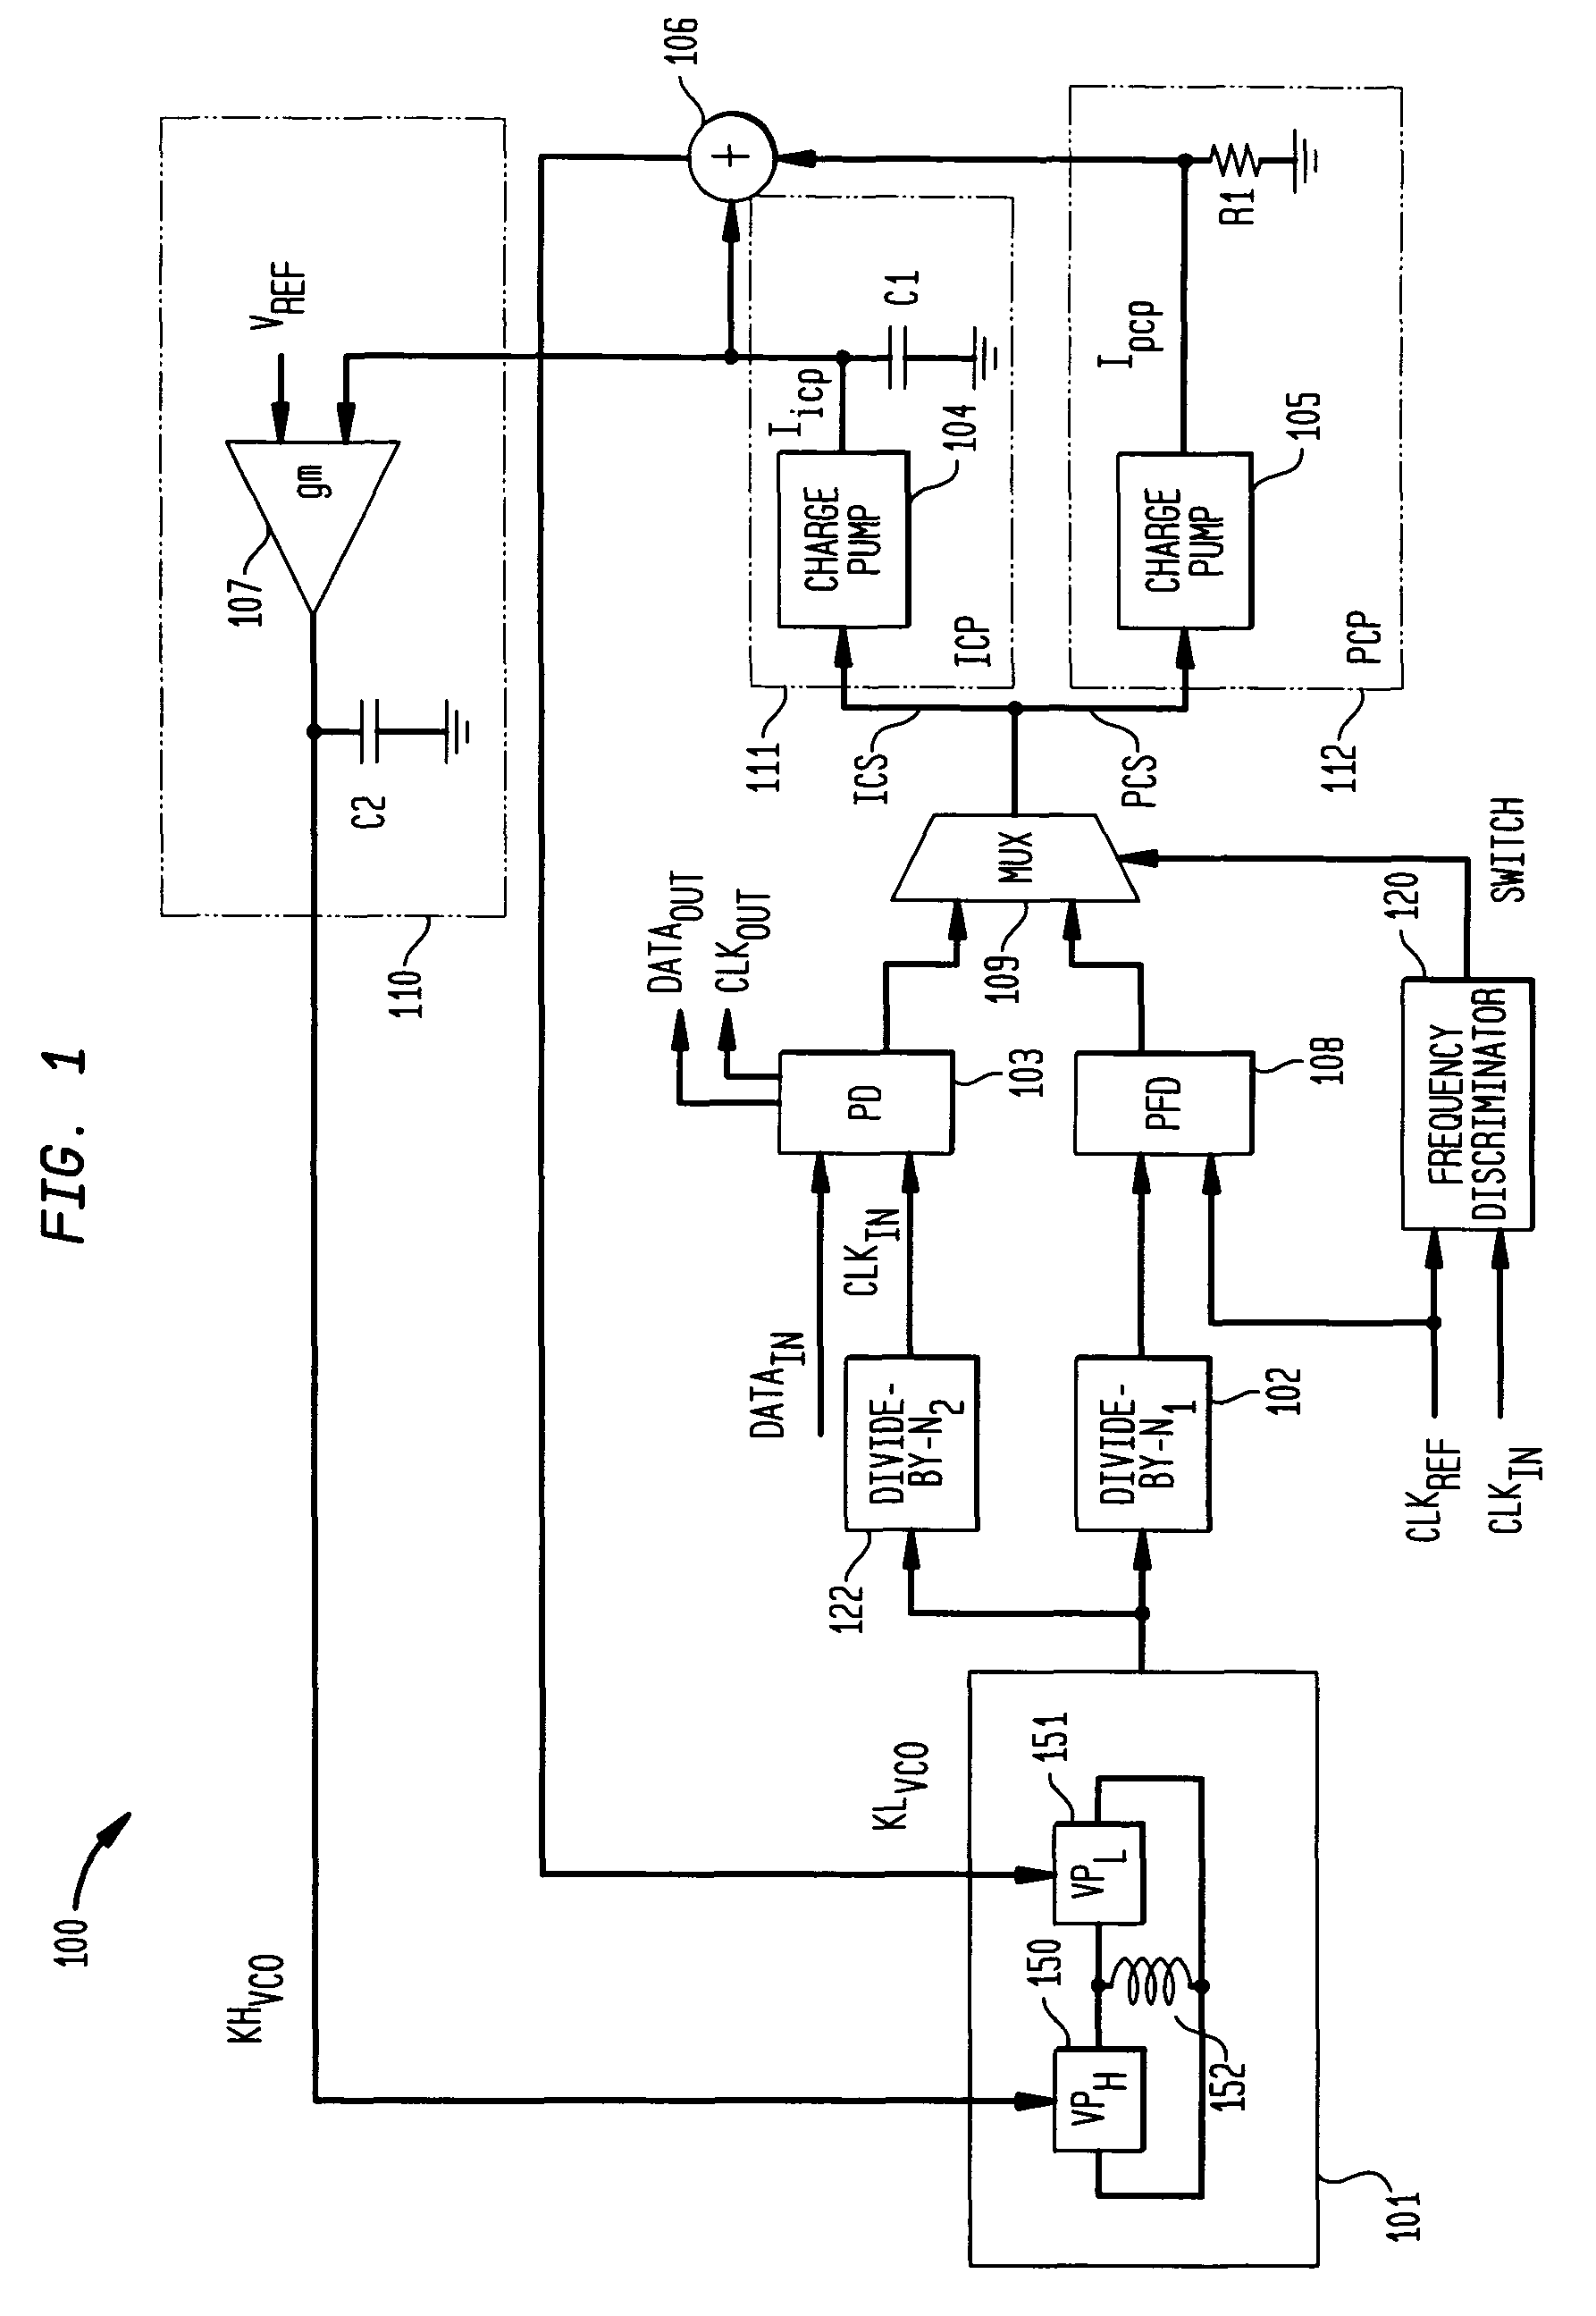 Adaptive loop bandwidth circuit for a PLL